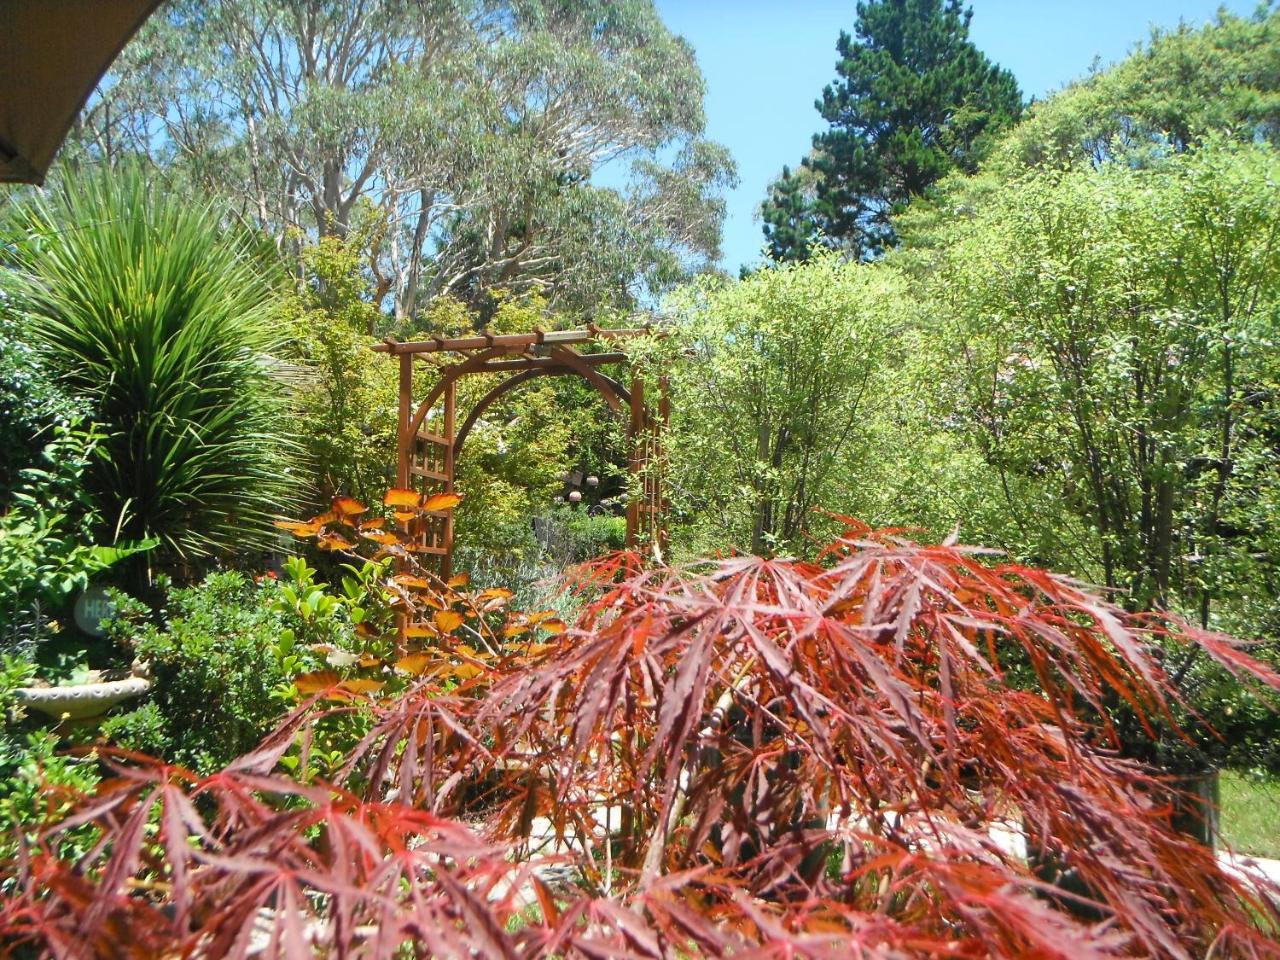 Crimson Villa Katoomba Exterior photo